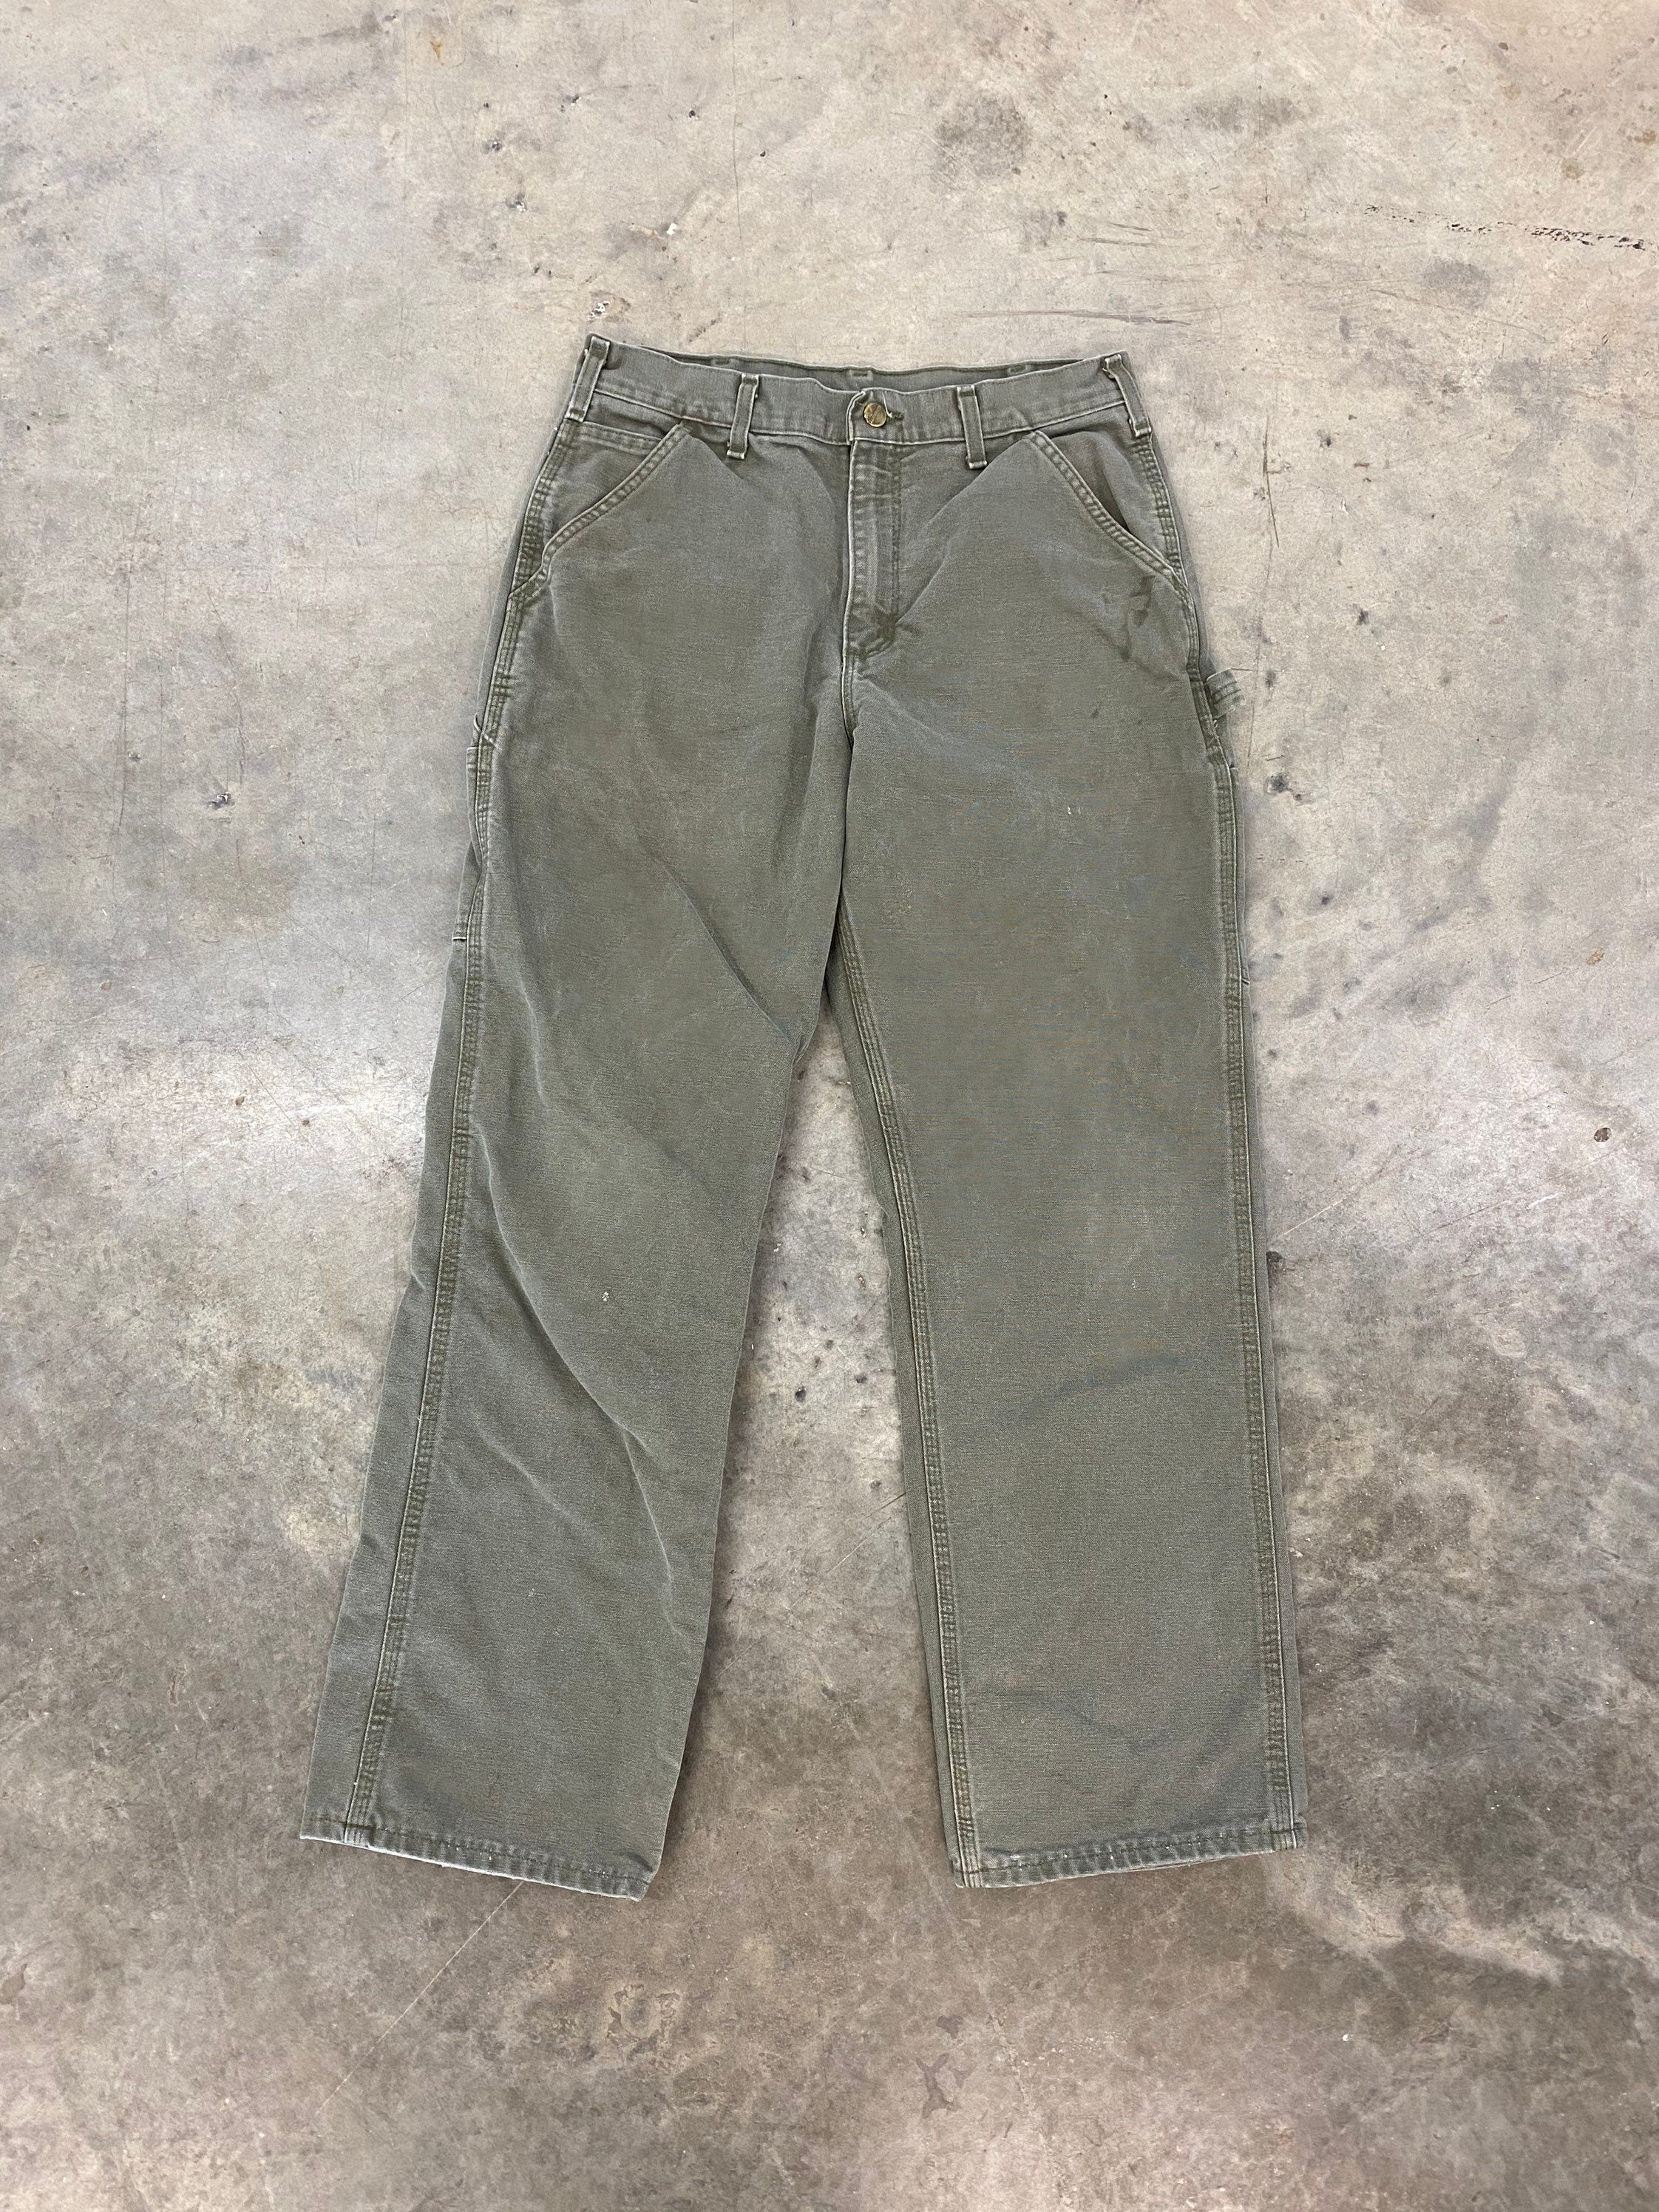 Carhartt Moss Green Pants Women's Measurements - Depop